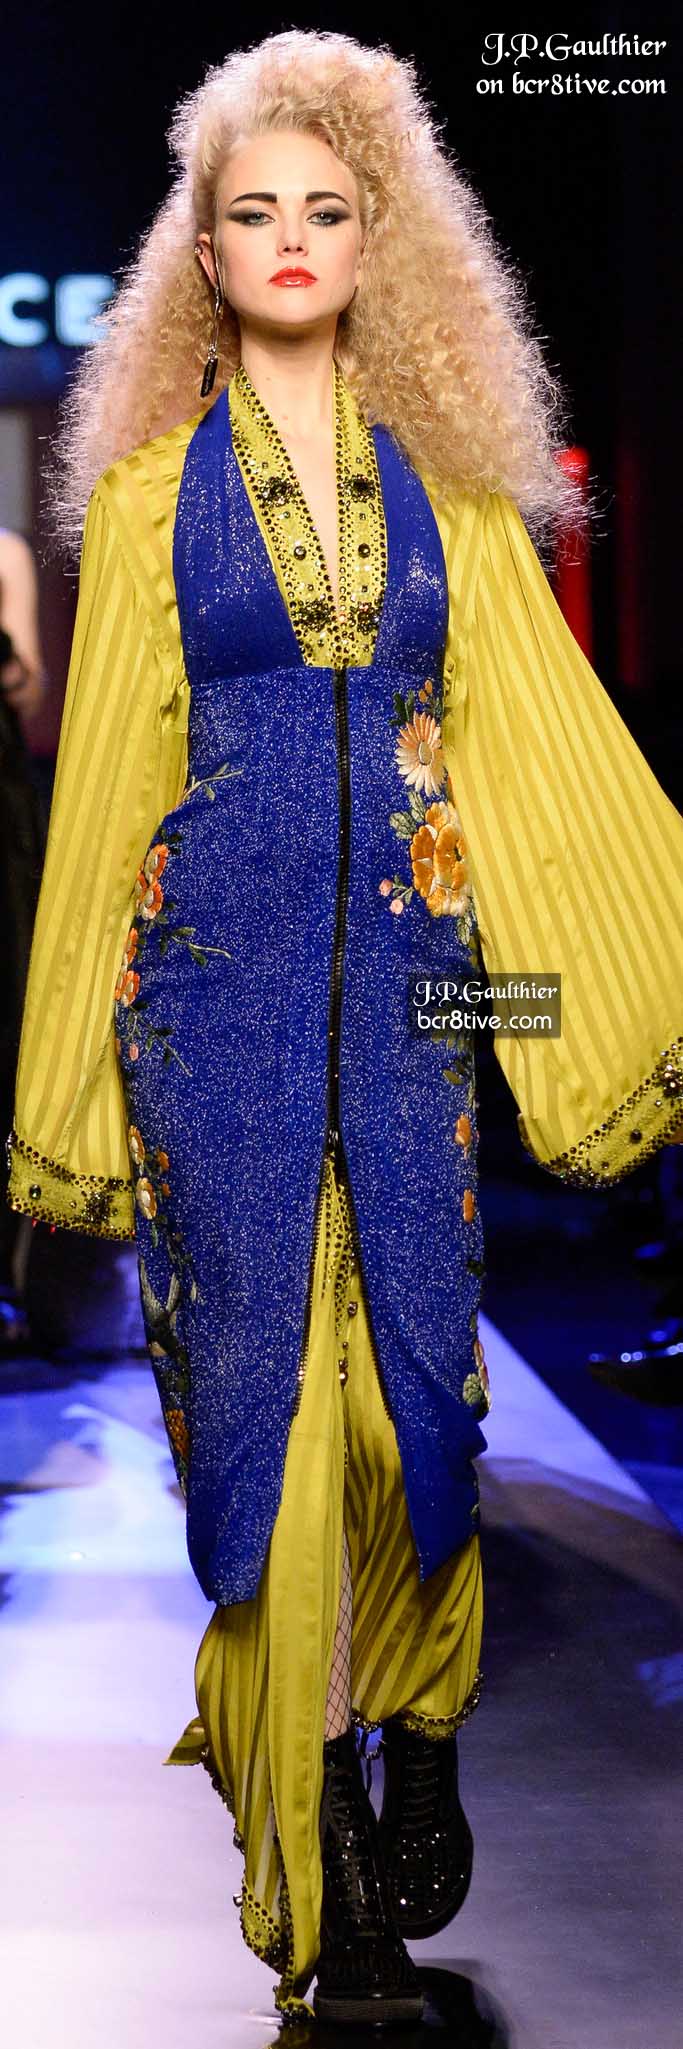 Jean Paul Gaultier Spring 2016 Haute Couture